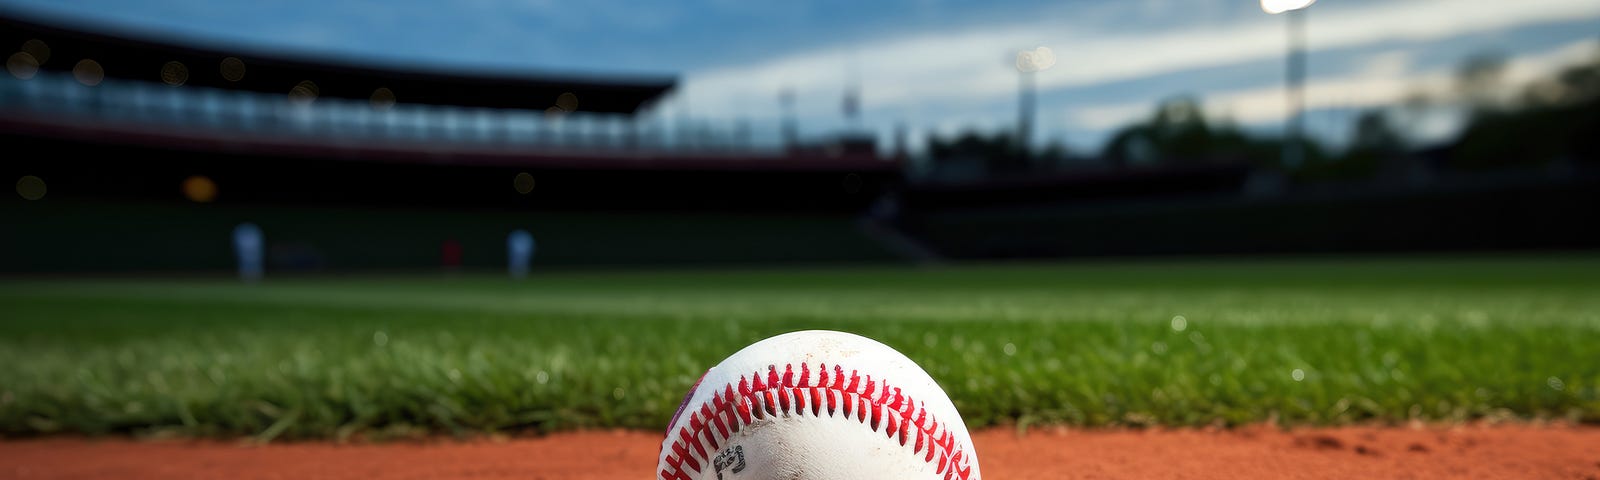 AI generated image of a baseball lying in a baseball field